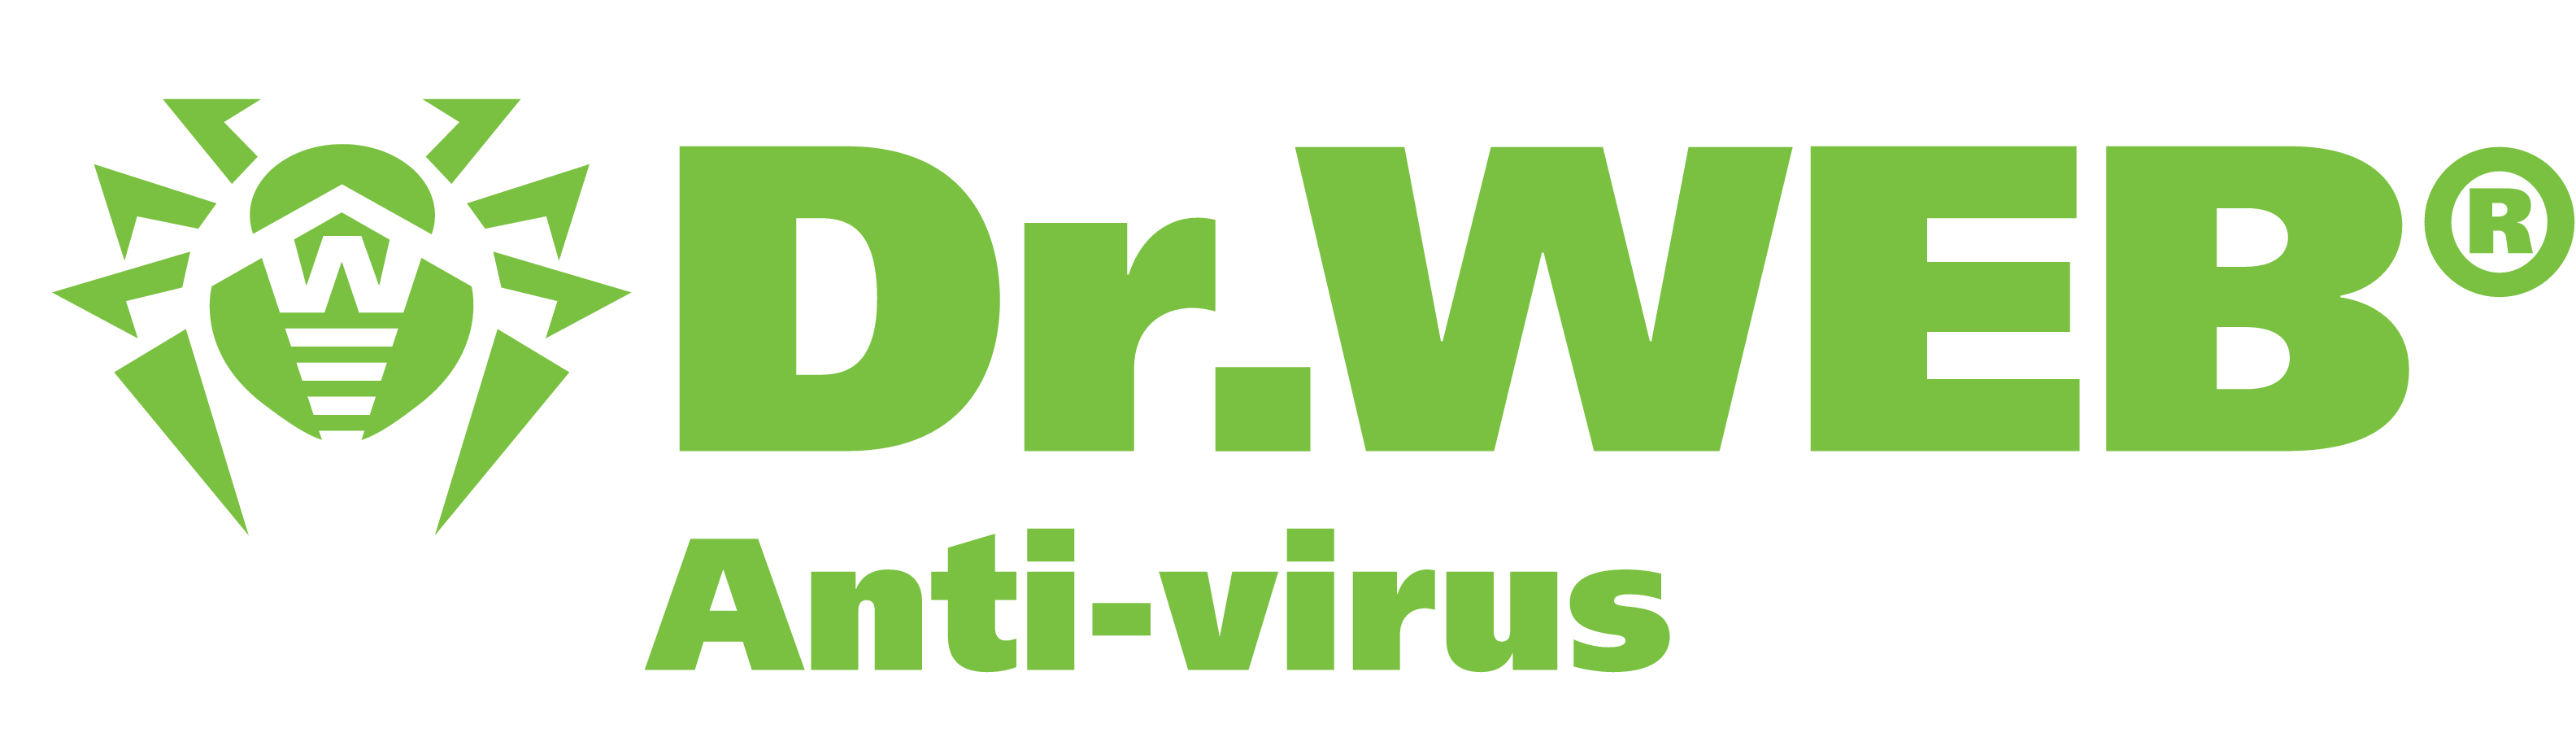 DrWeb_antivirus_green_logo